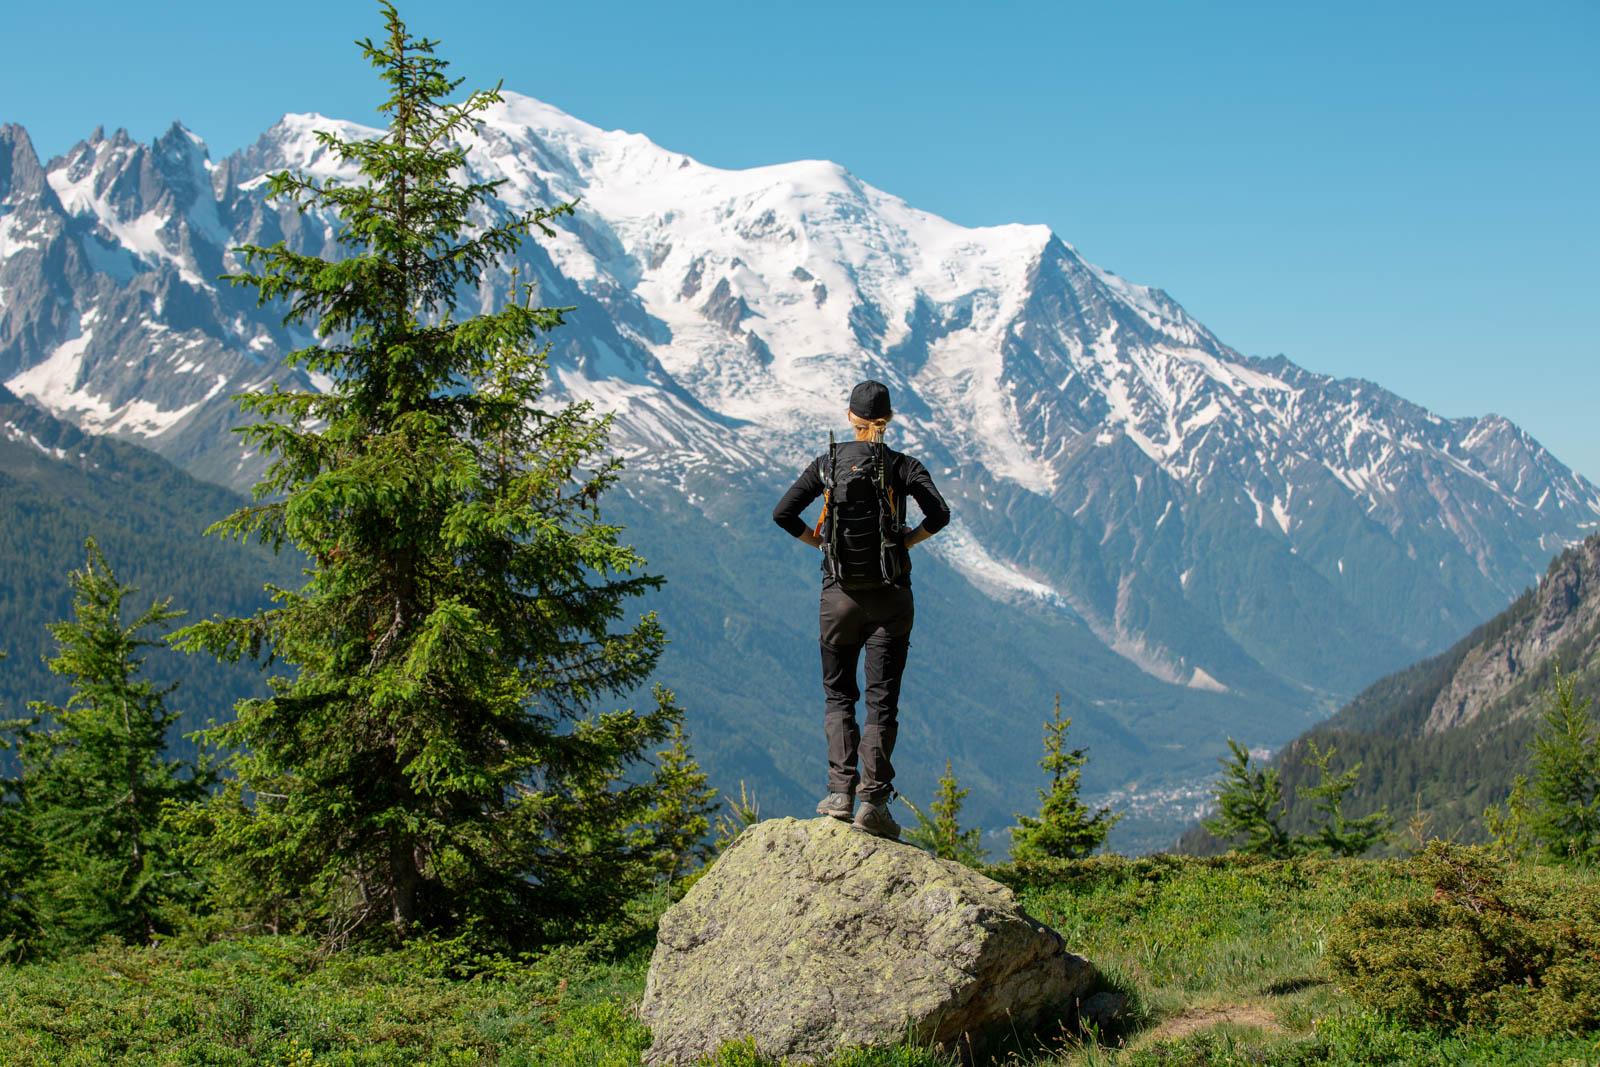 Etape 1 – på vandretur rundt om Mont Blanc - Mette & Rejser